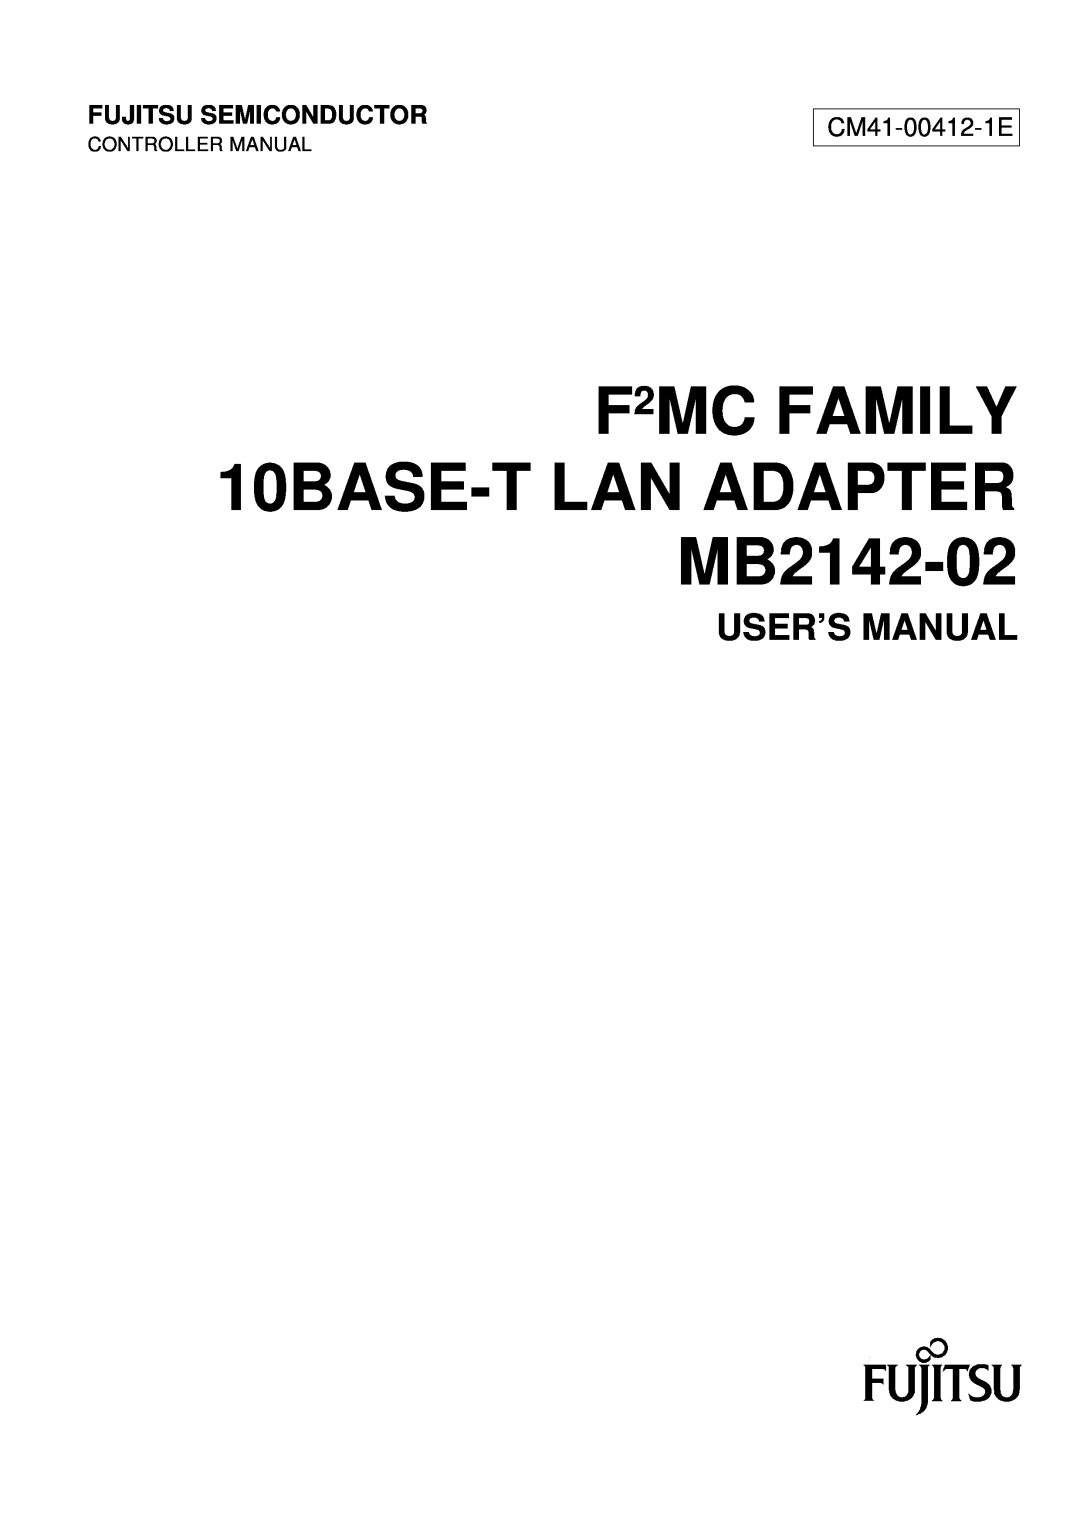 Fujitsu user manual CM41-00412-1E, F2MC FAMILY 10BASE-T LAN ADAPTER MB2142-02, User’S Manual, Fujitsu Semiconductor 